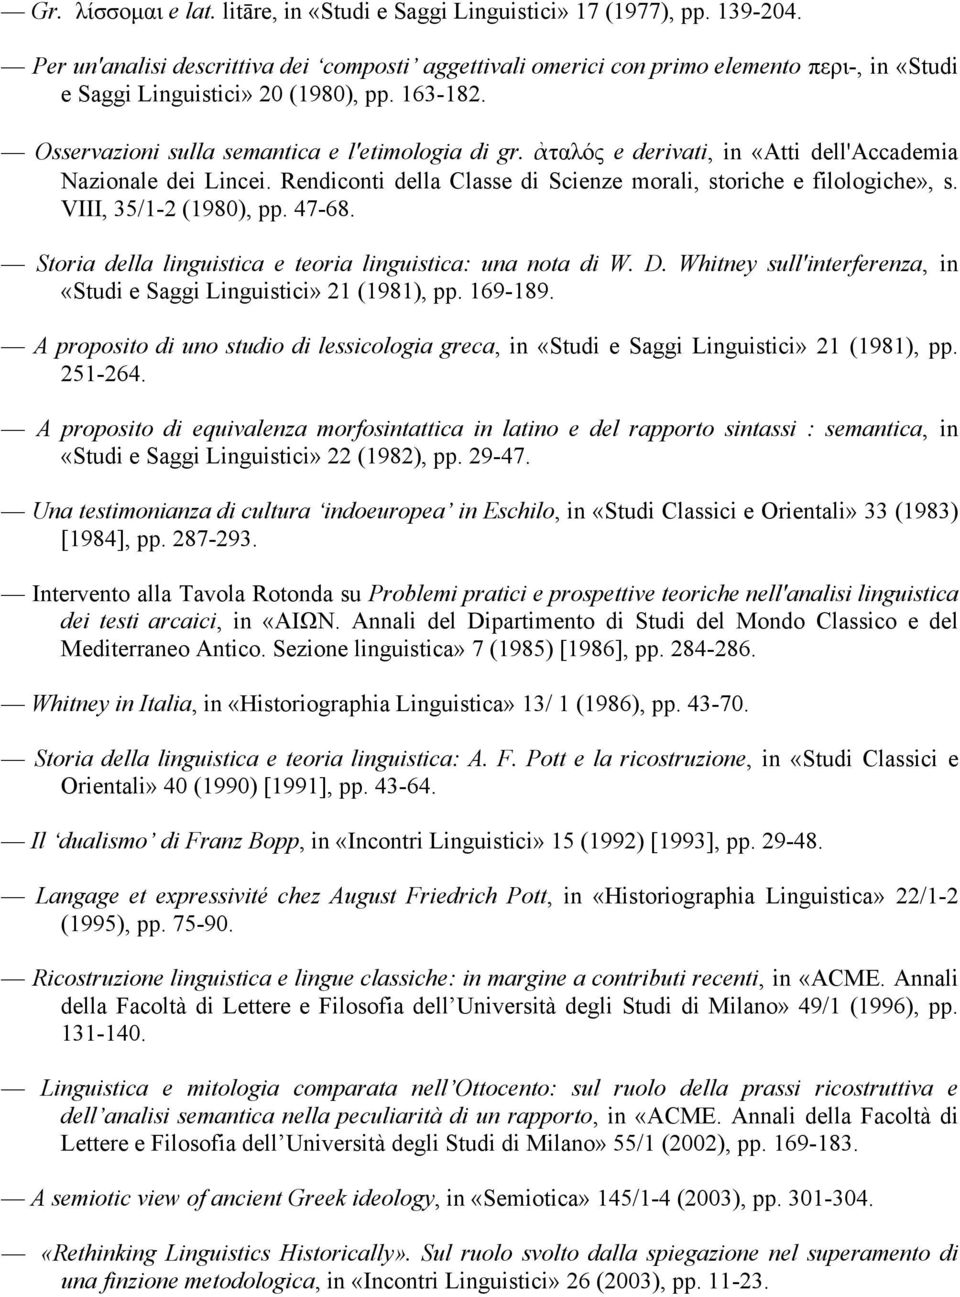 ἀταλός e derivati, in «Atti dell'accademia Nazionale dei Lincei. Rendiconti della Classe di Scienze morali, storiche e filologiche», s. VIII, 35/1-2 (1980), pp. 47-68.